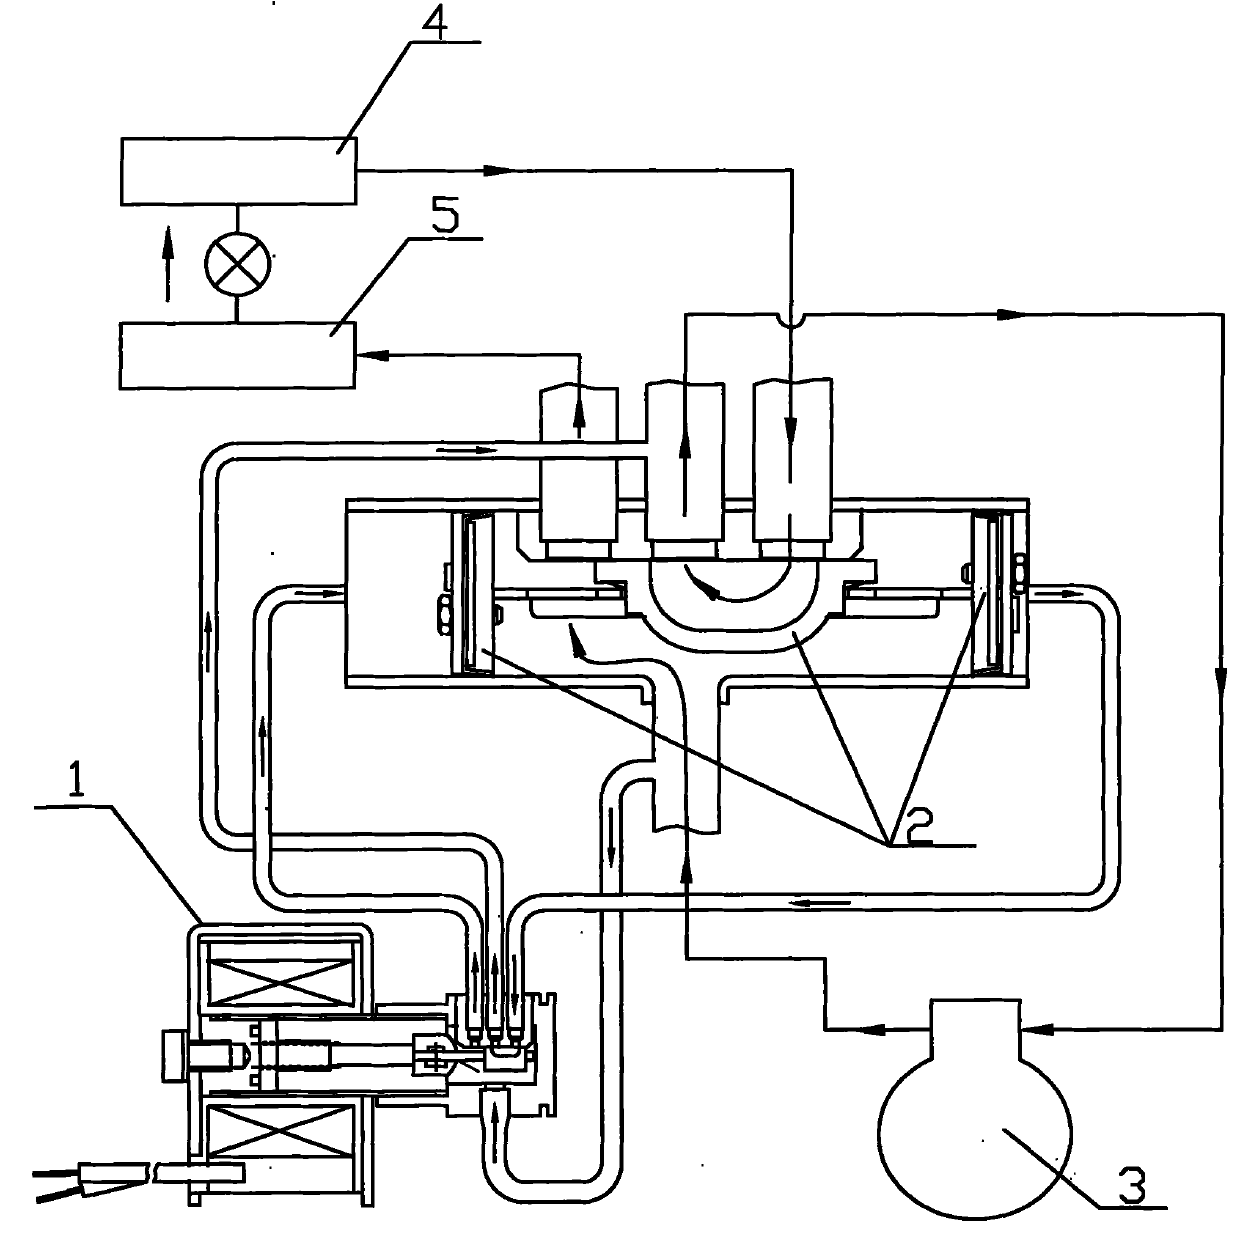 Control method for four-way valve